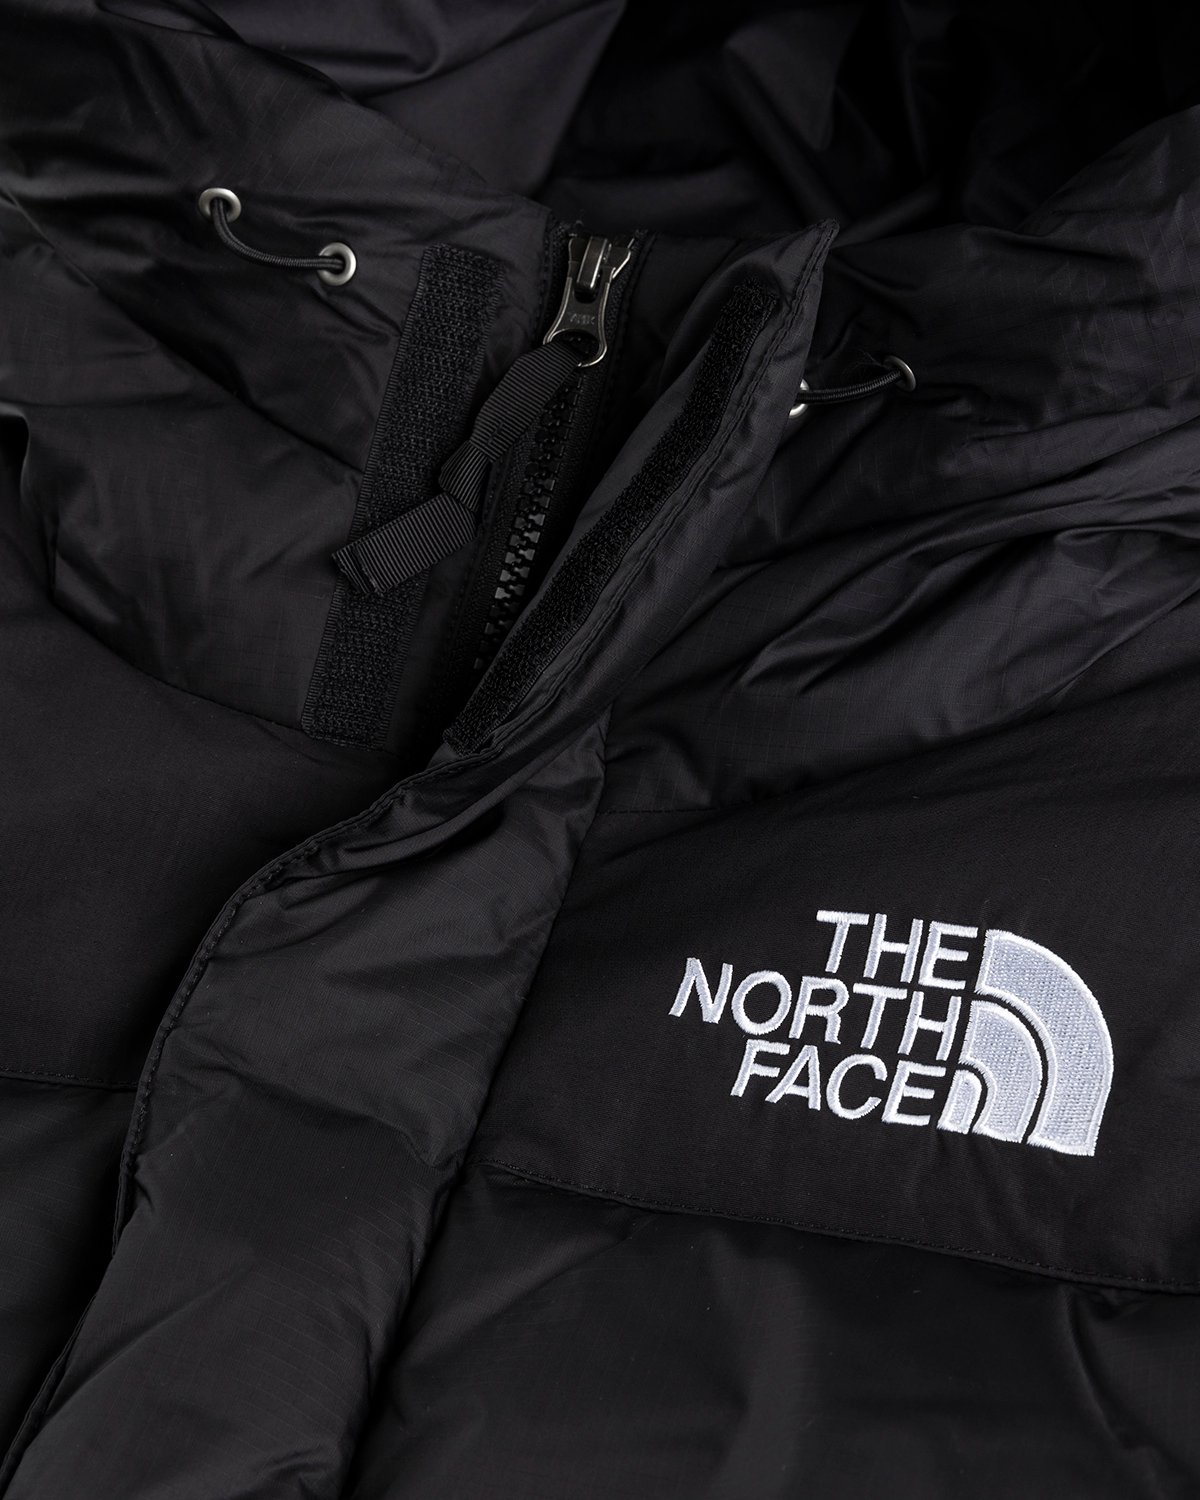 The North Face - Himalayan Down Parka Black - Clothing - Black - Image 3